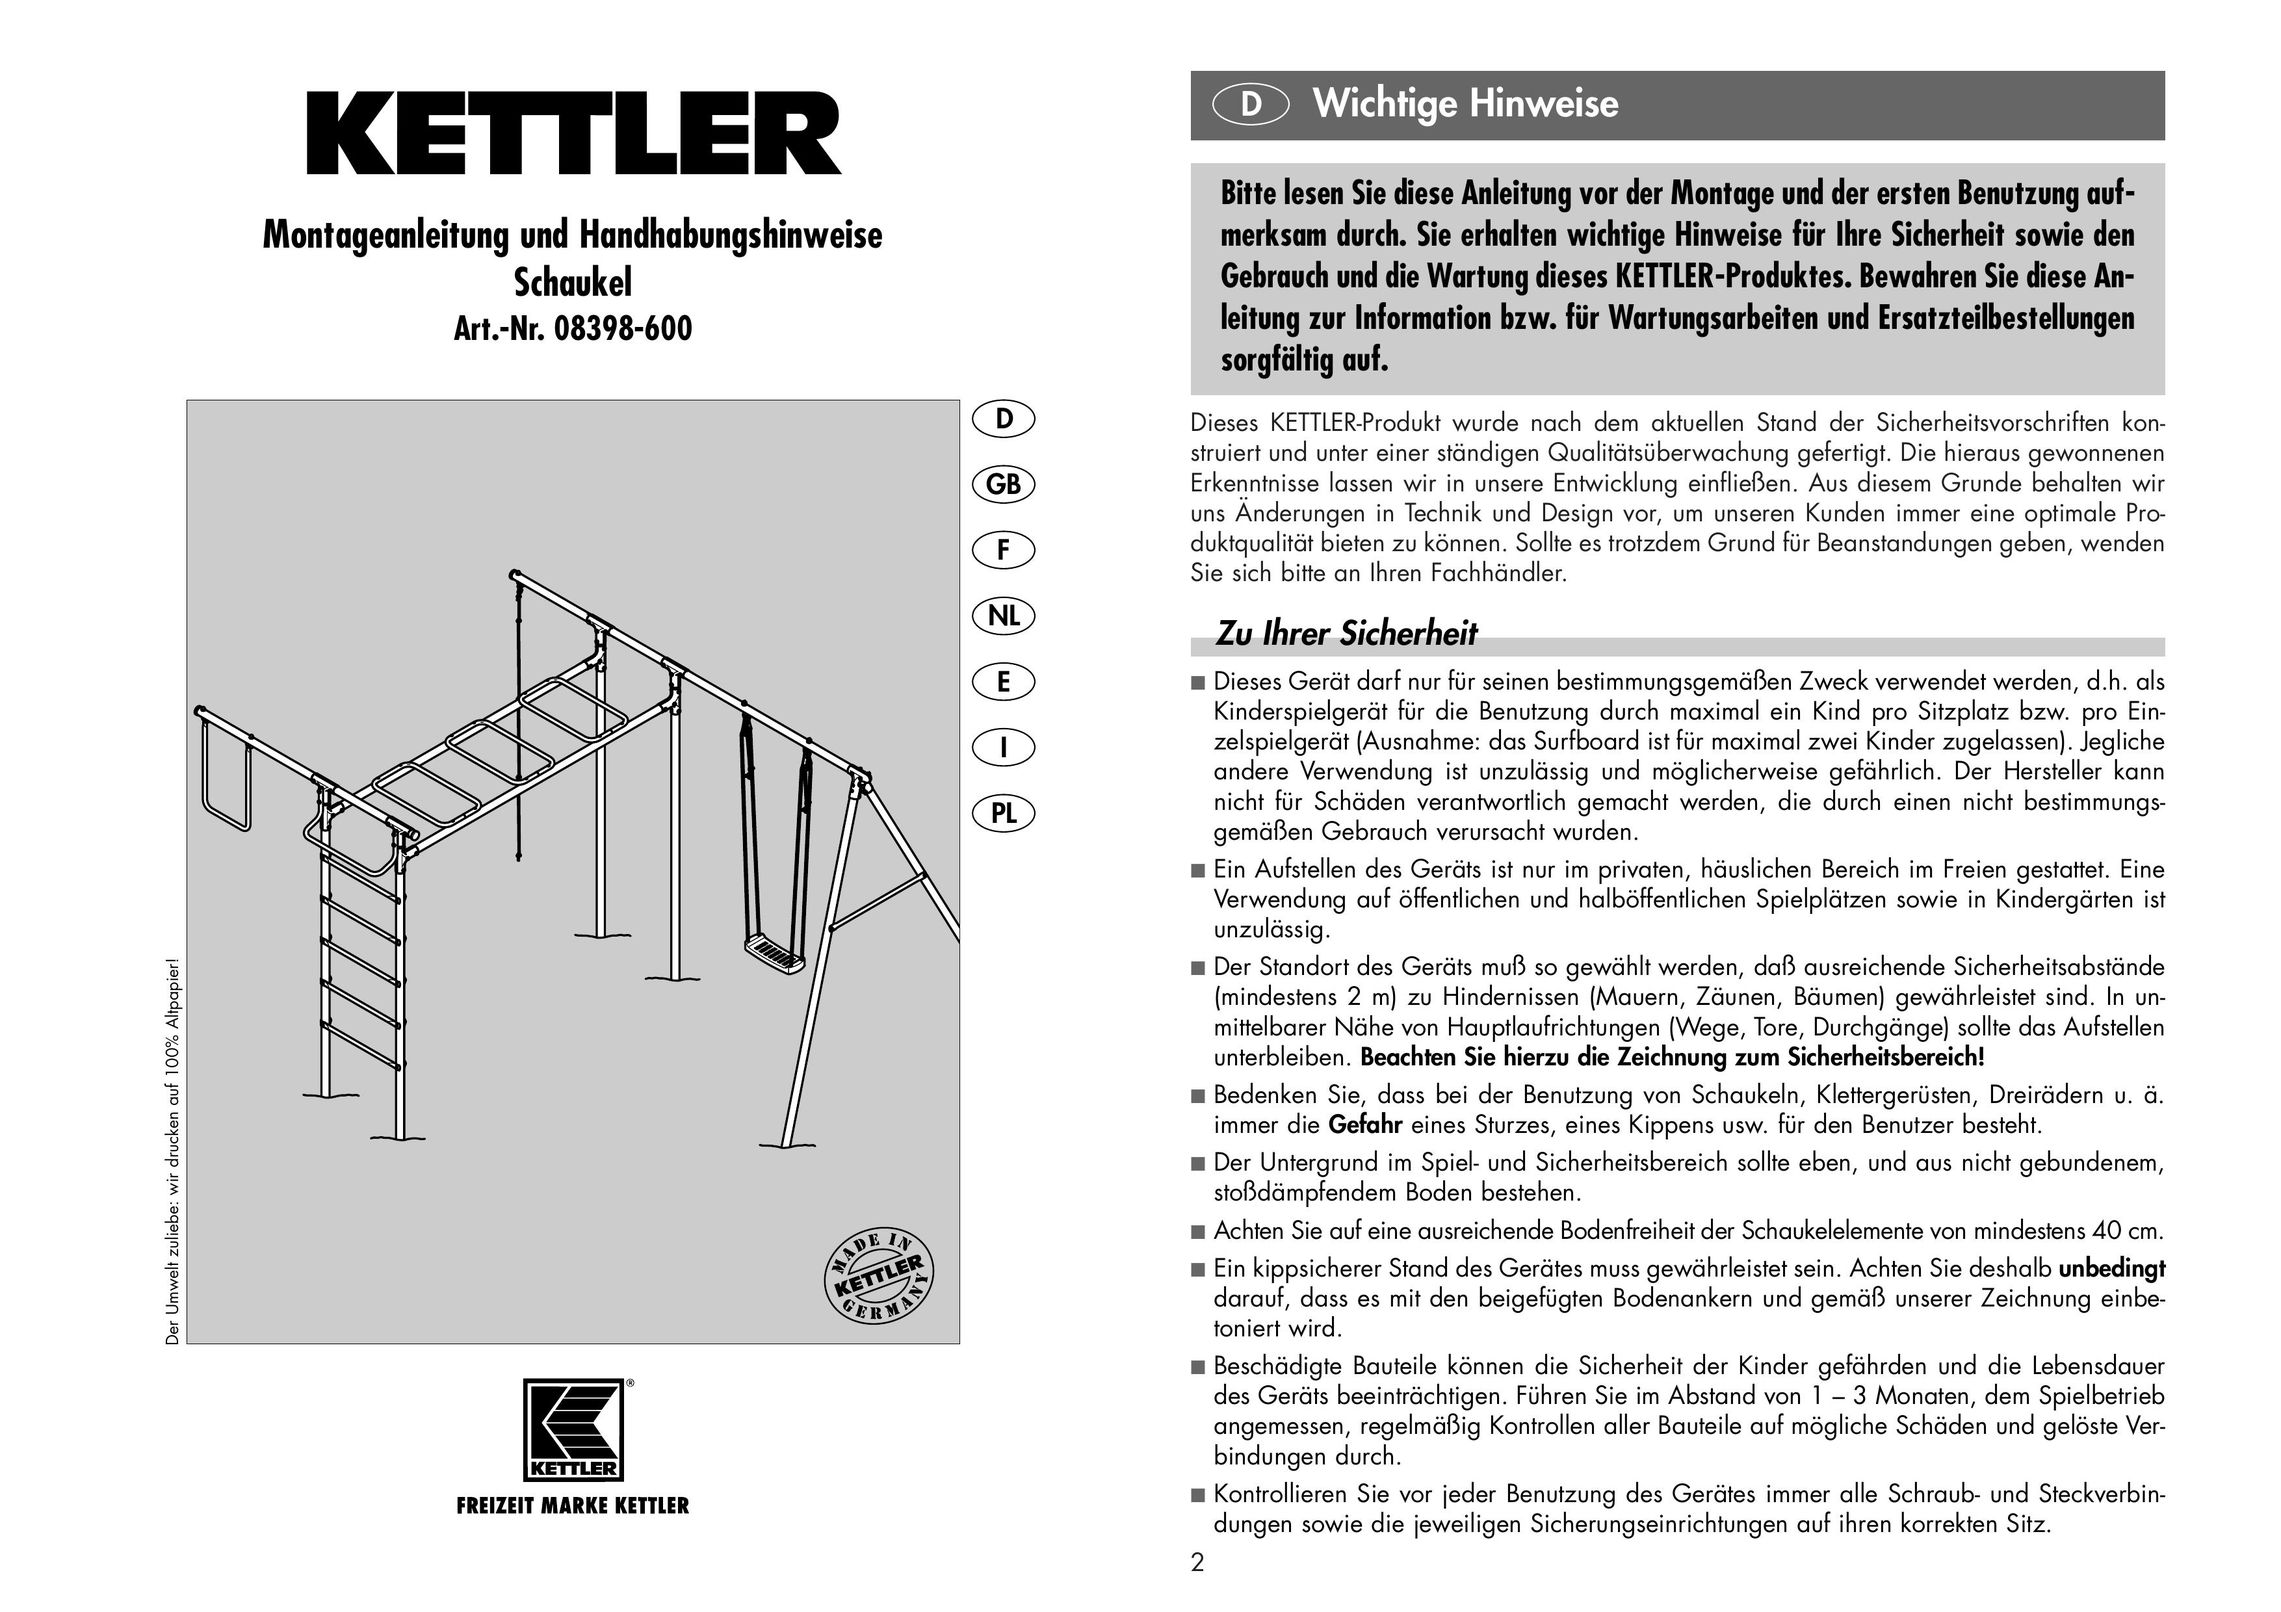 Kettler 08398-600 All in One Printer User Manual